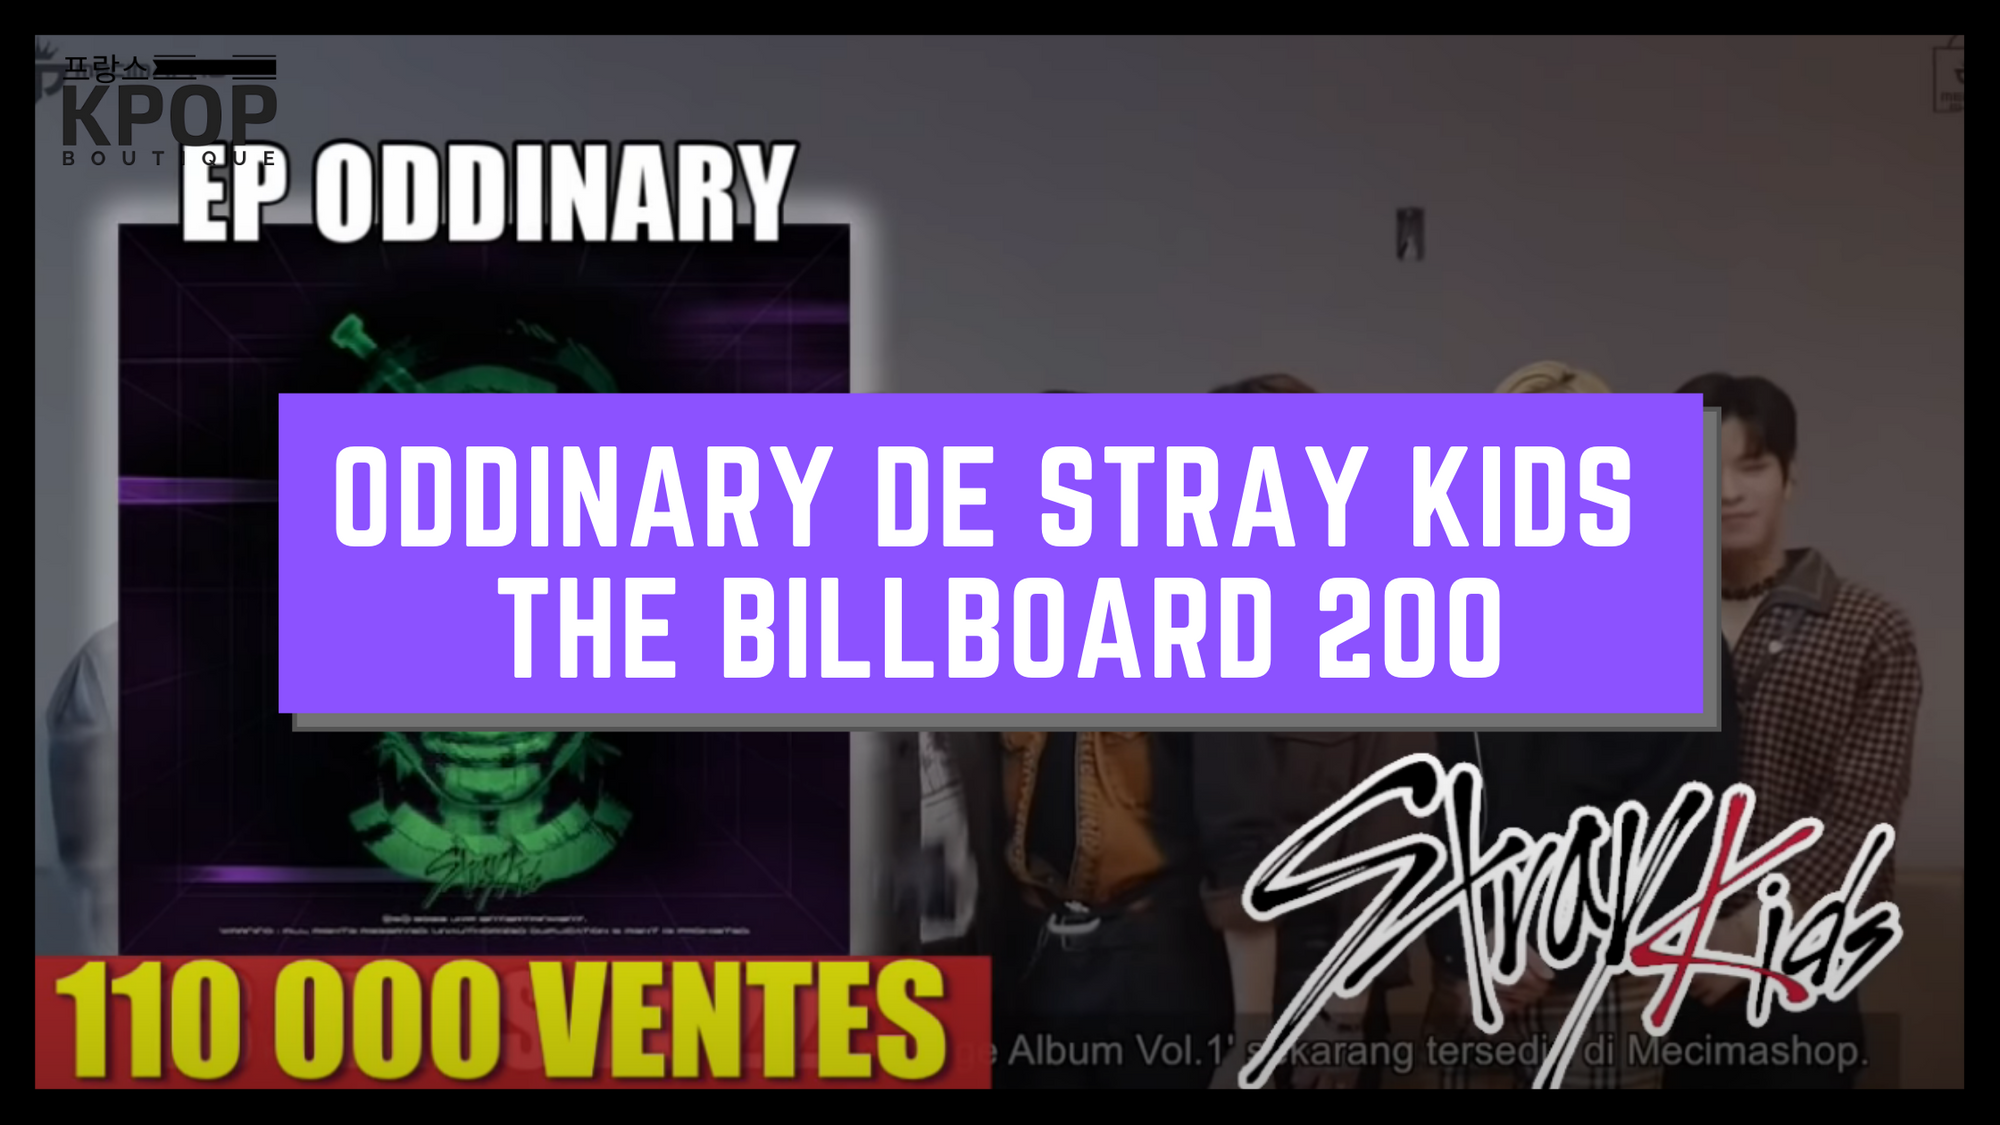 Oddinary de Stray Kids  The billboard 200